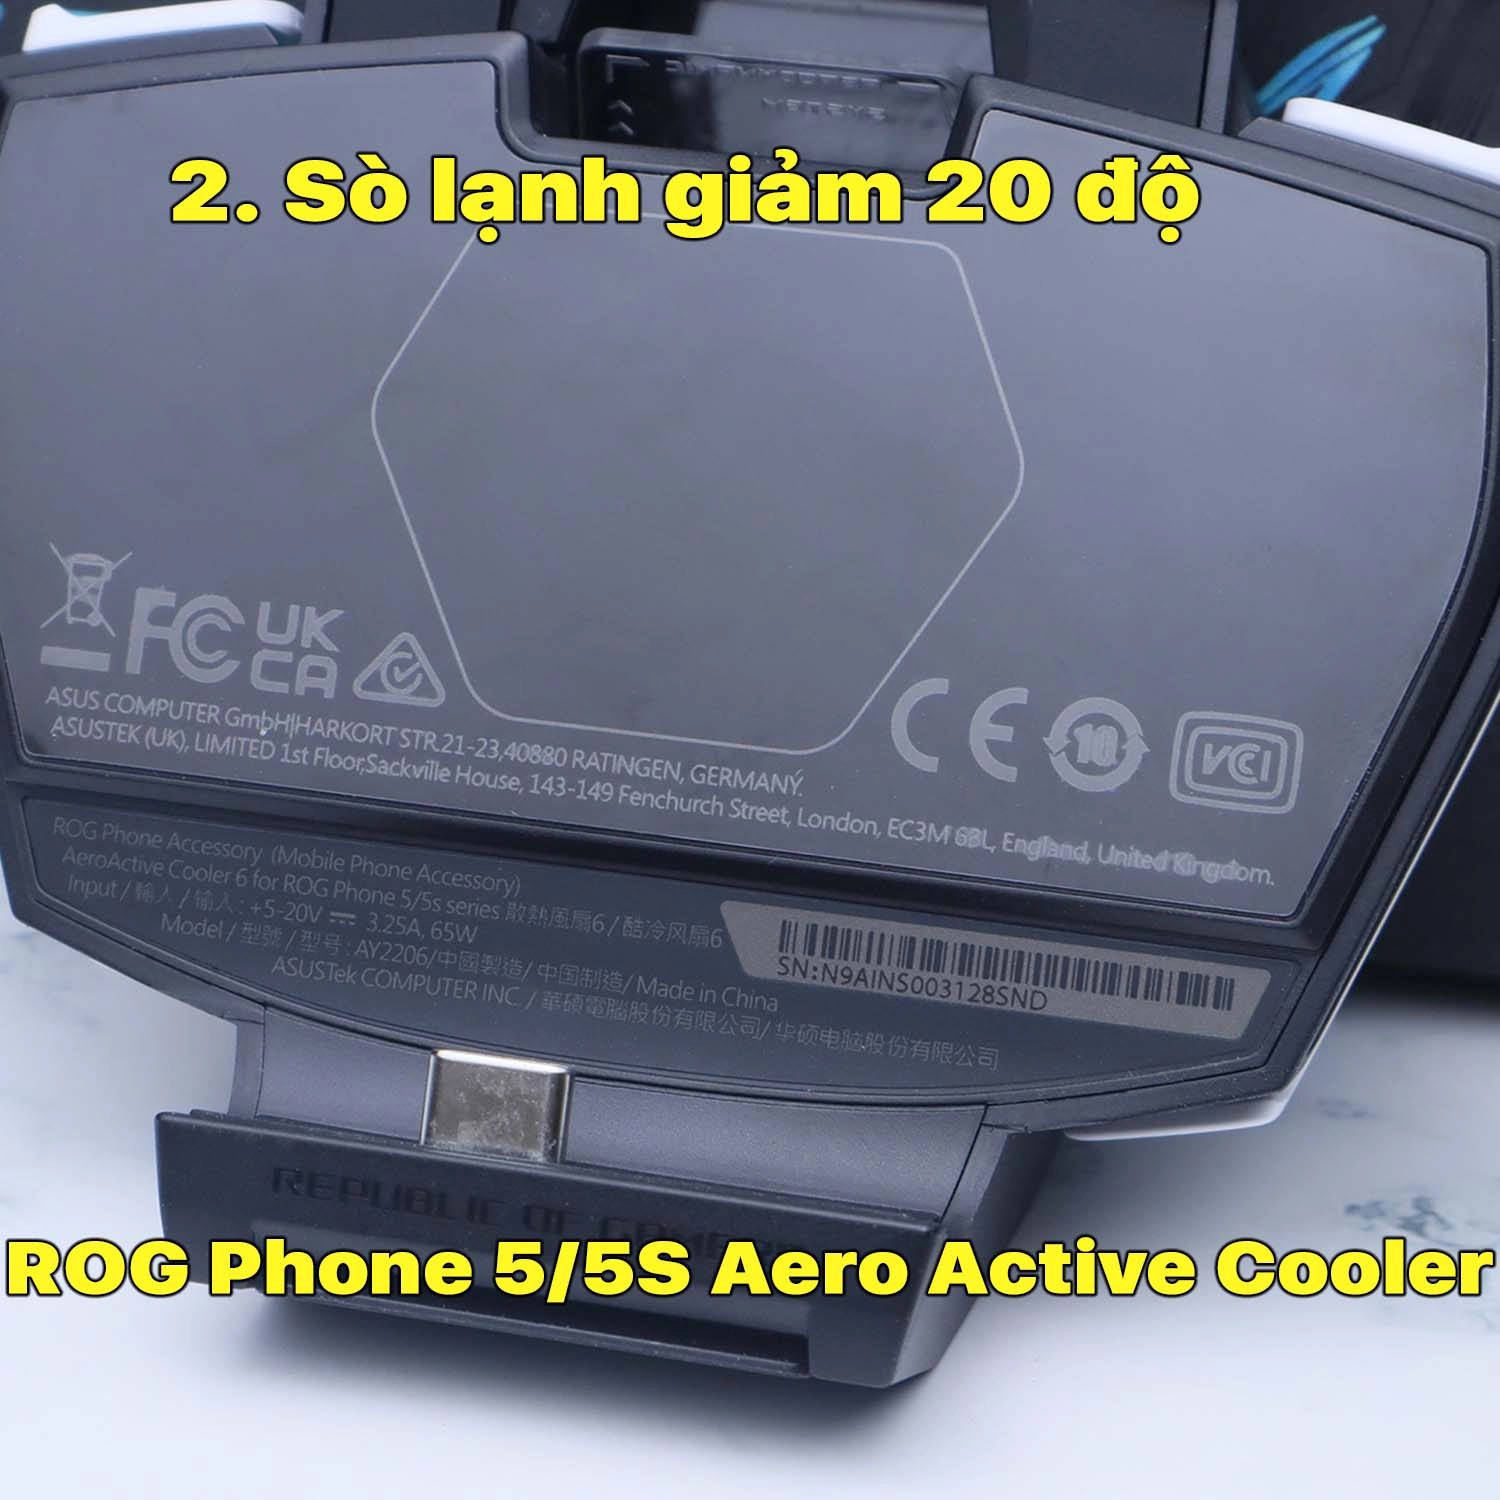 quat-tan-nhiet-dien-thoai-rog-phone-5-5s-aeroactive-cooler-2